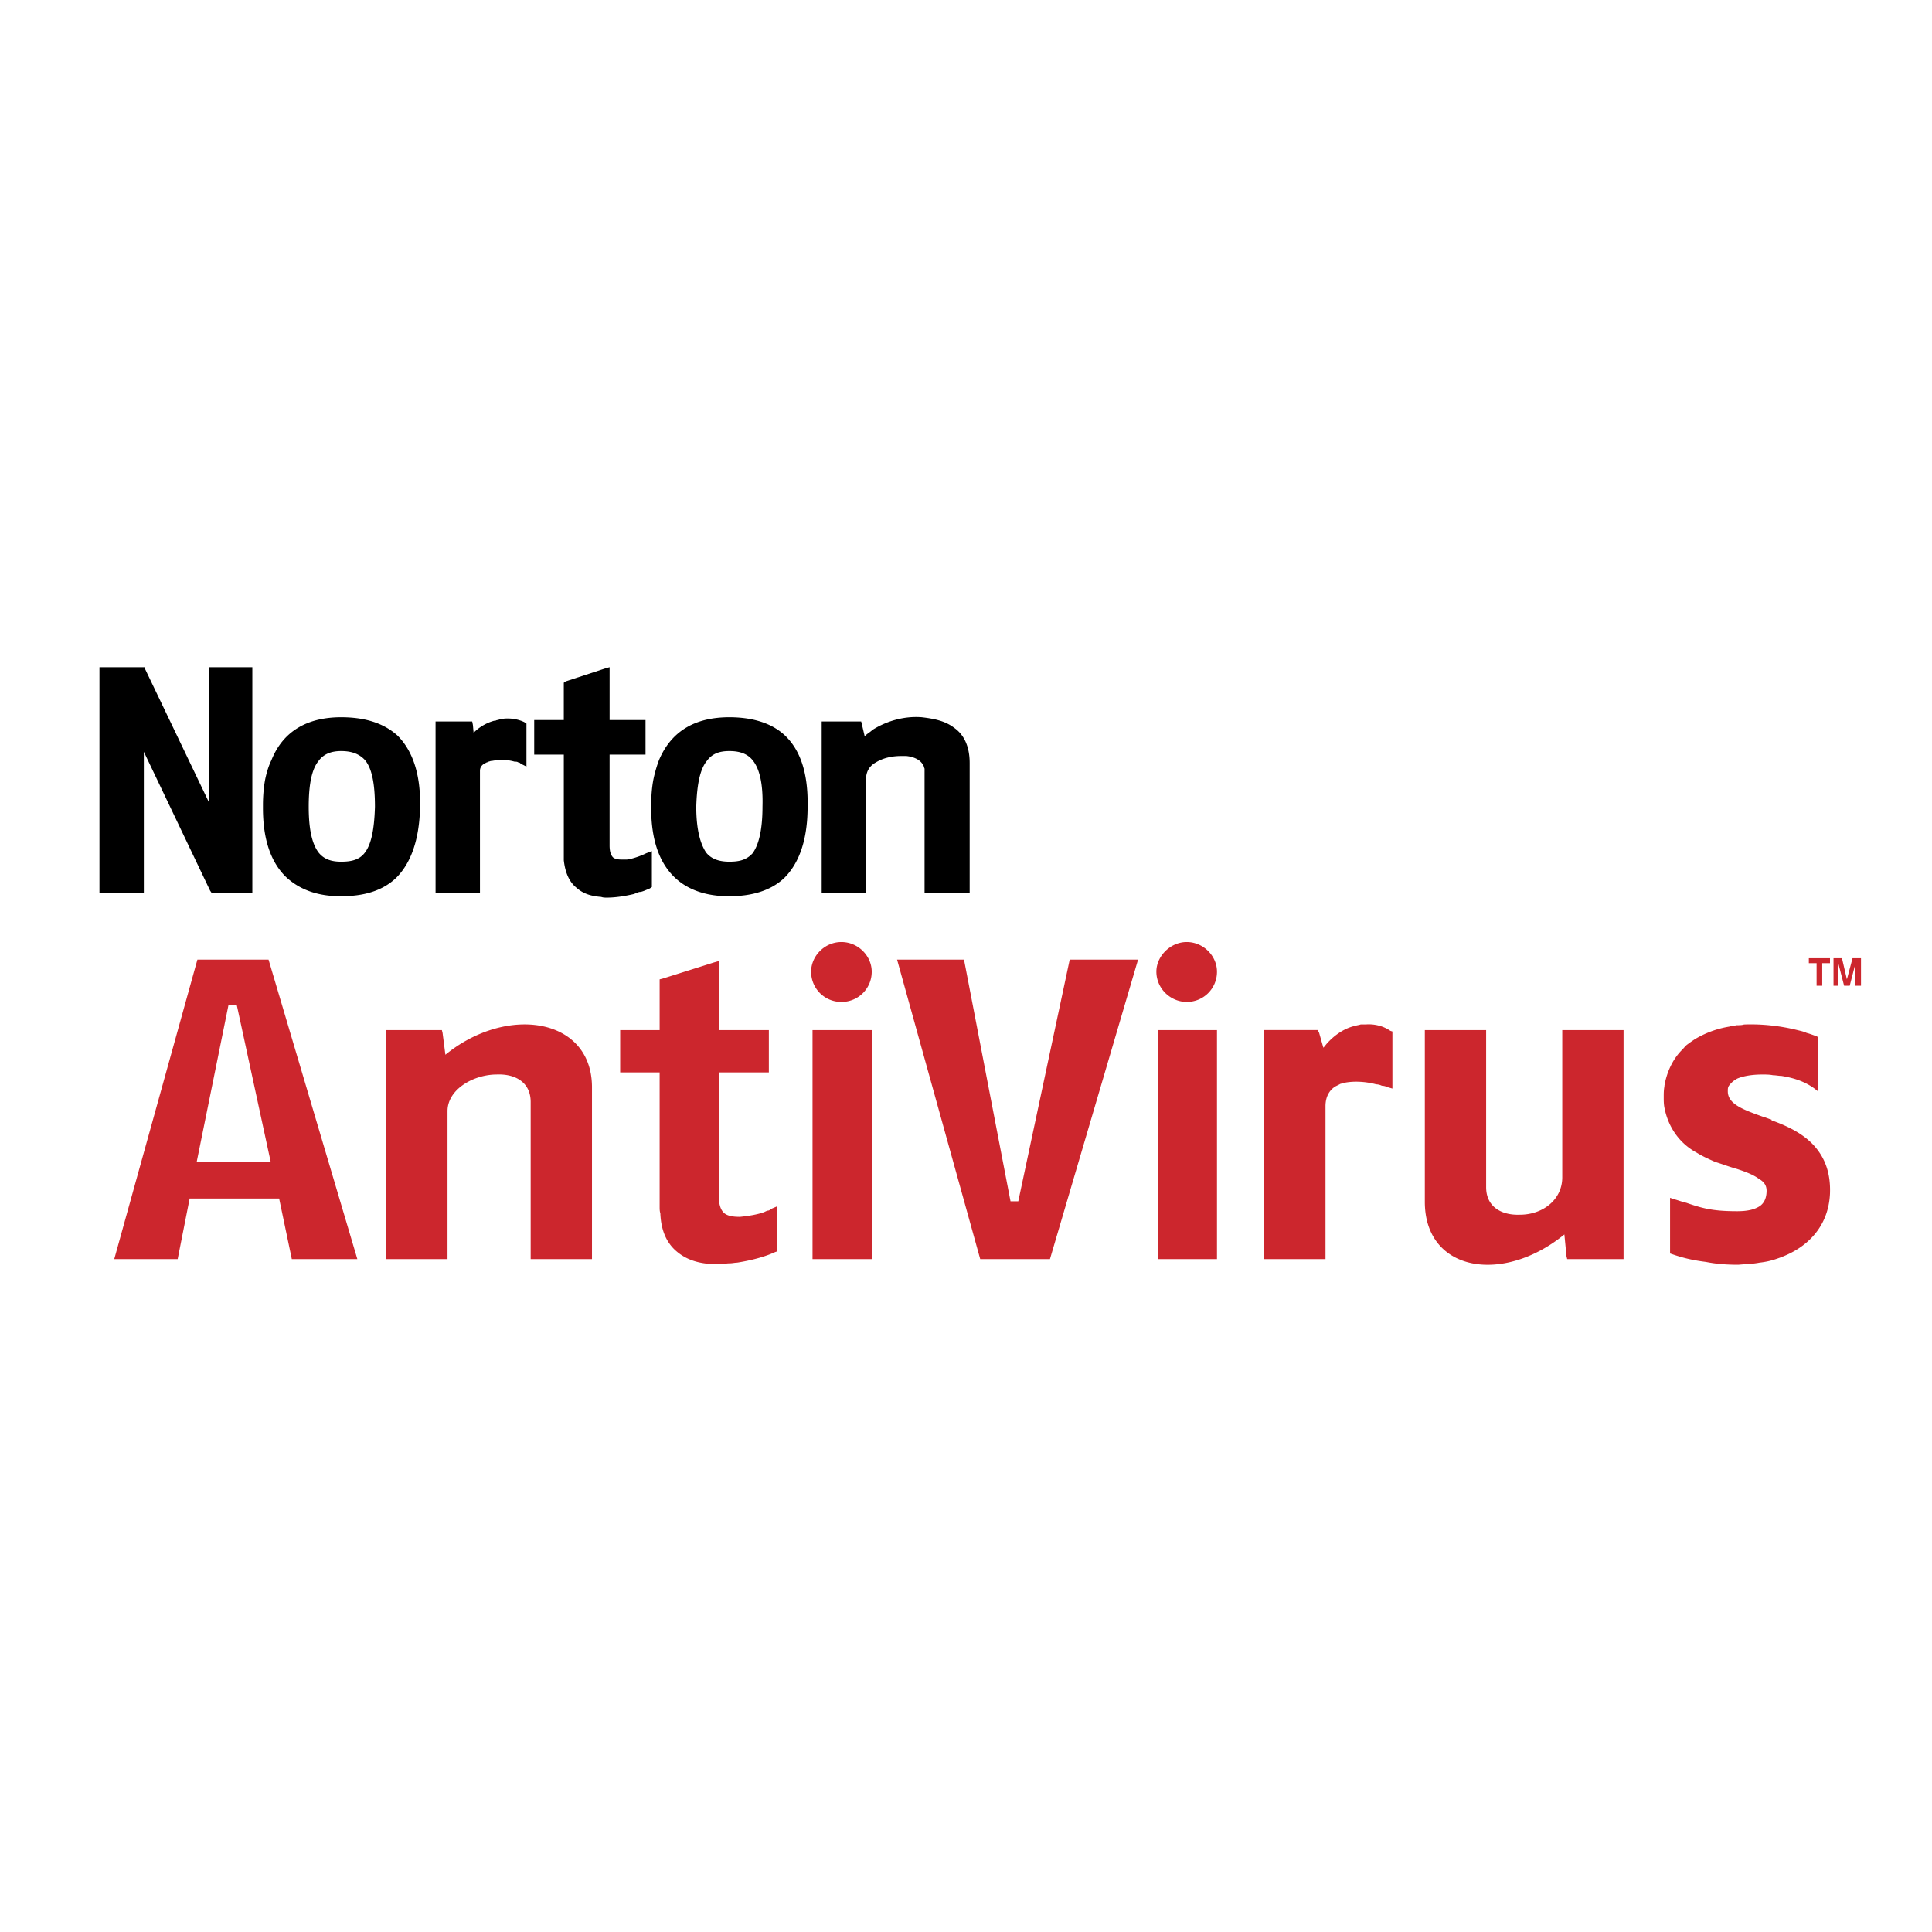 Norton AntiVirus (Symantec Corporation) logo colors